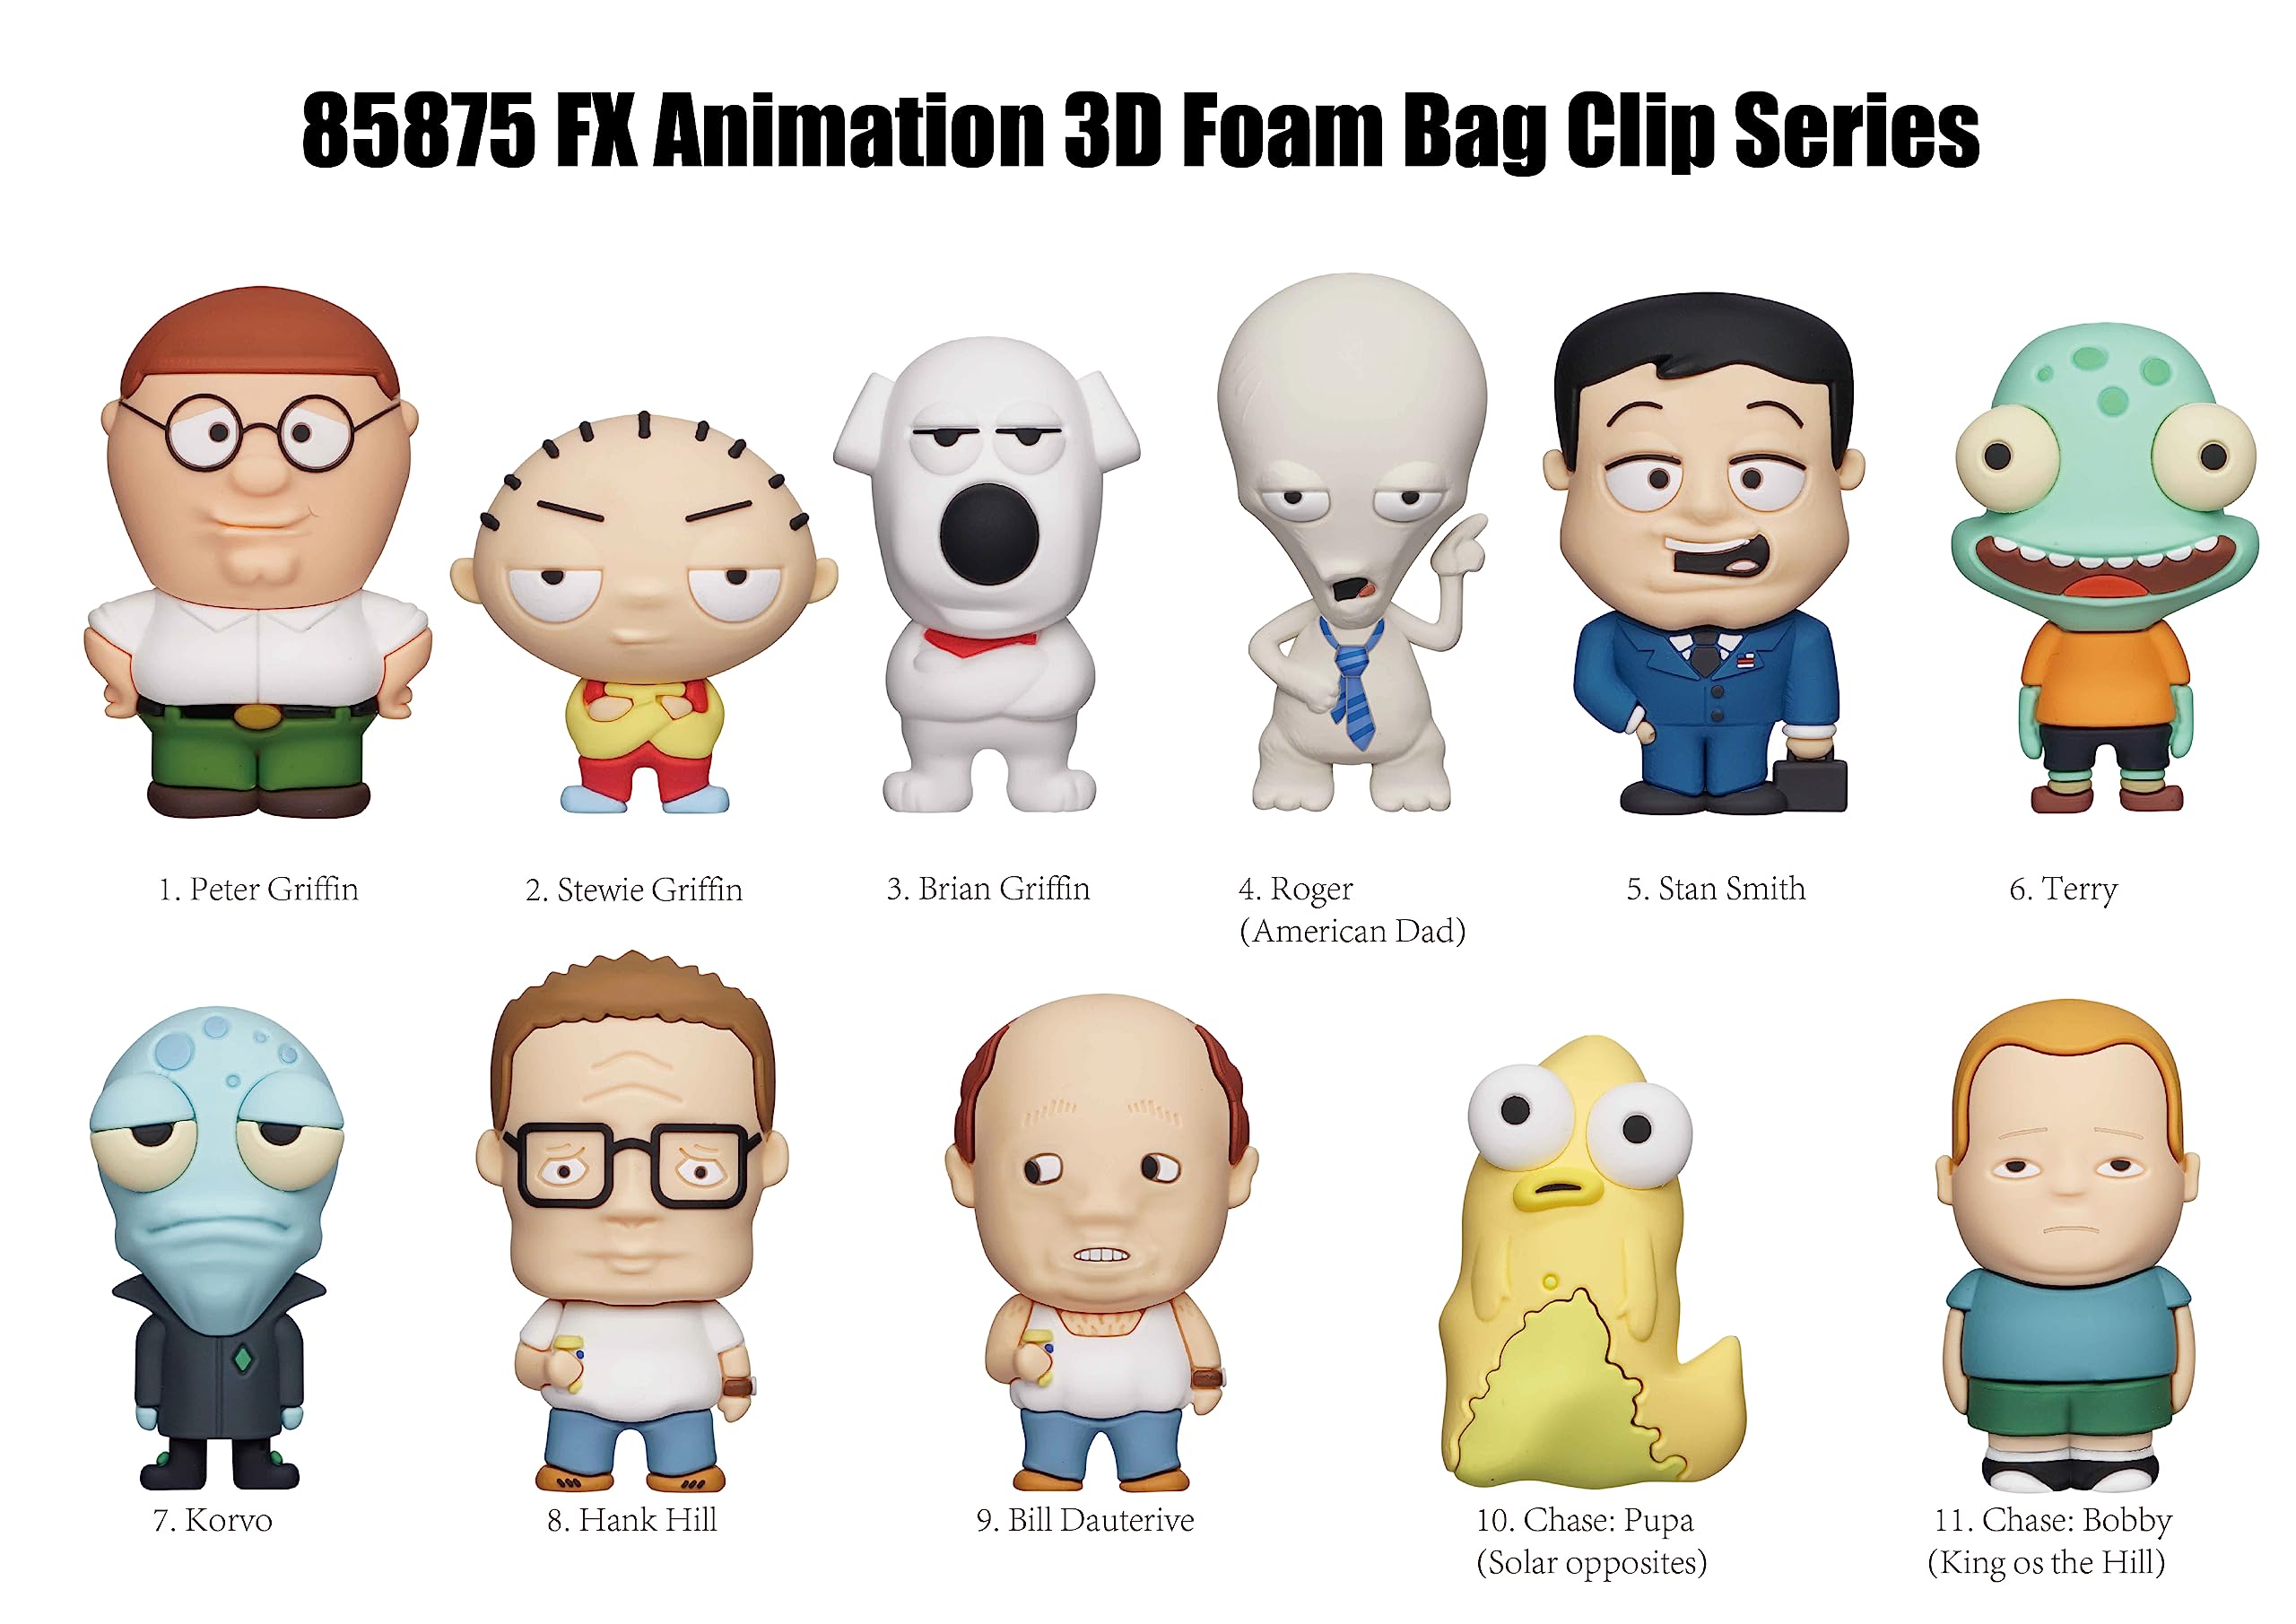 Monogram International FX Animation 3D Foam Bag Clip Series